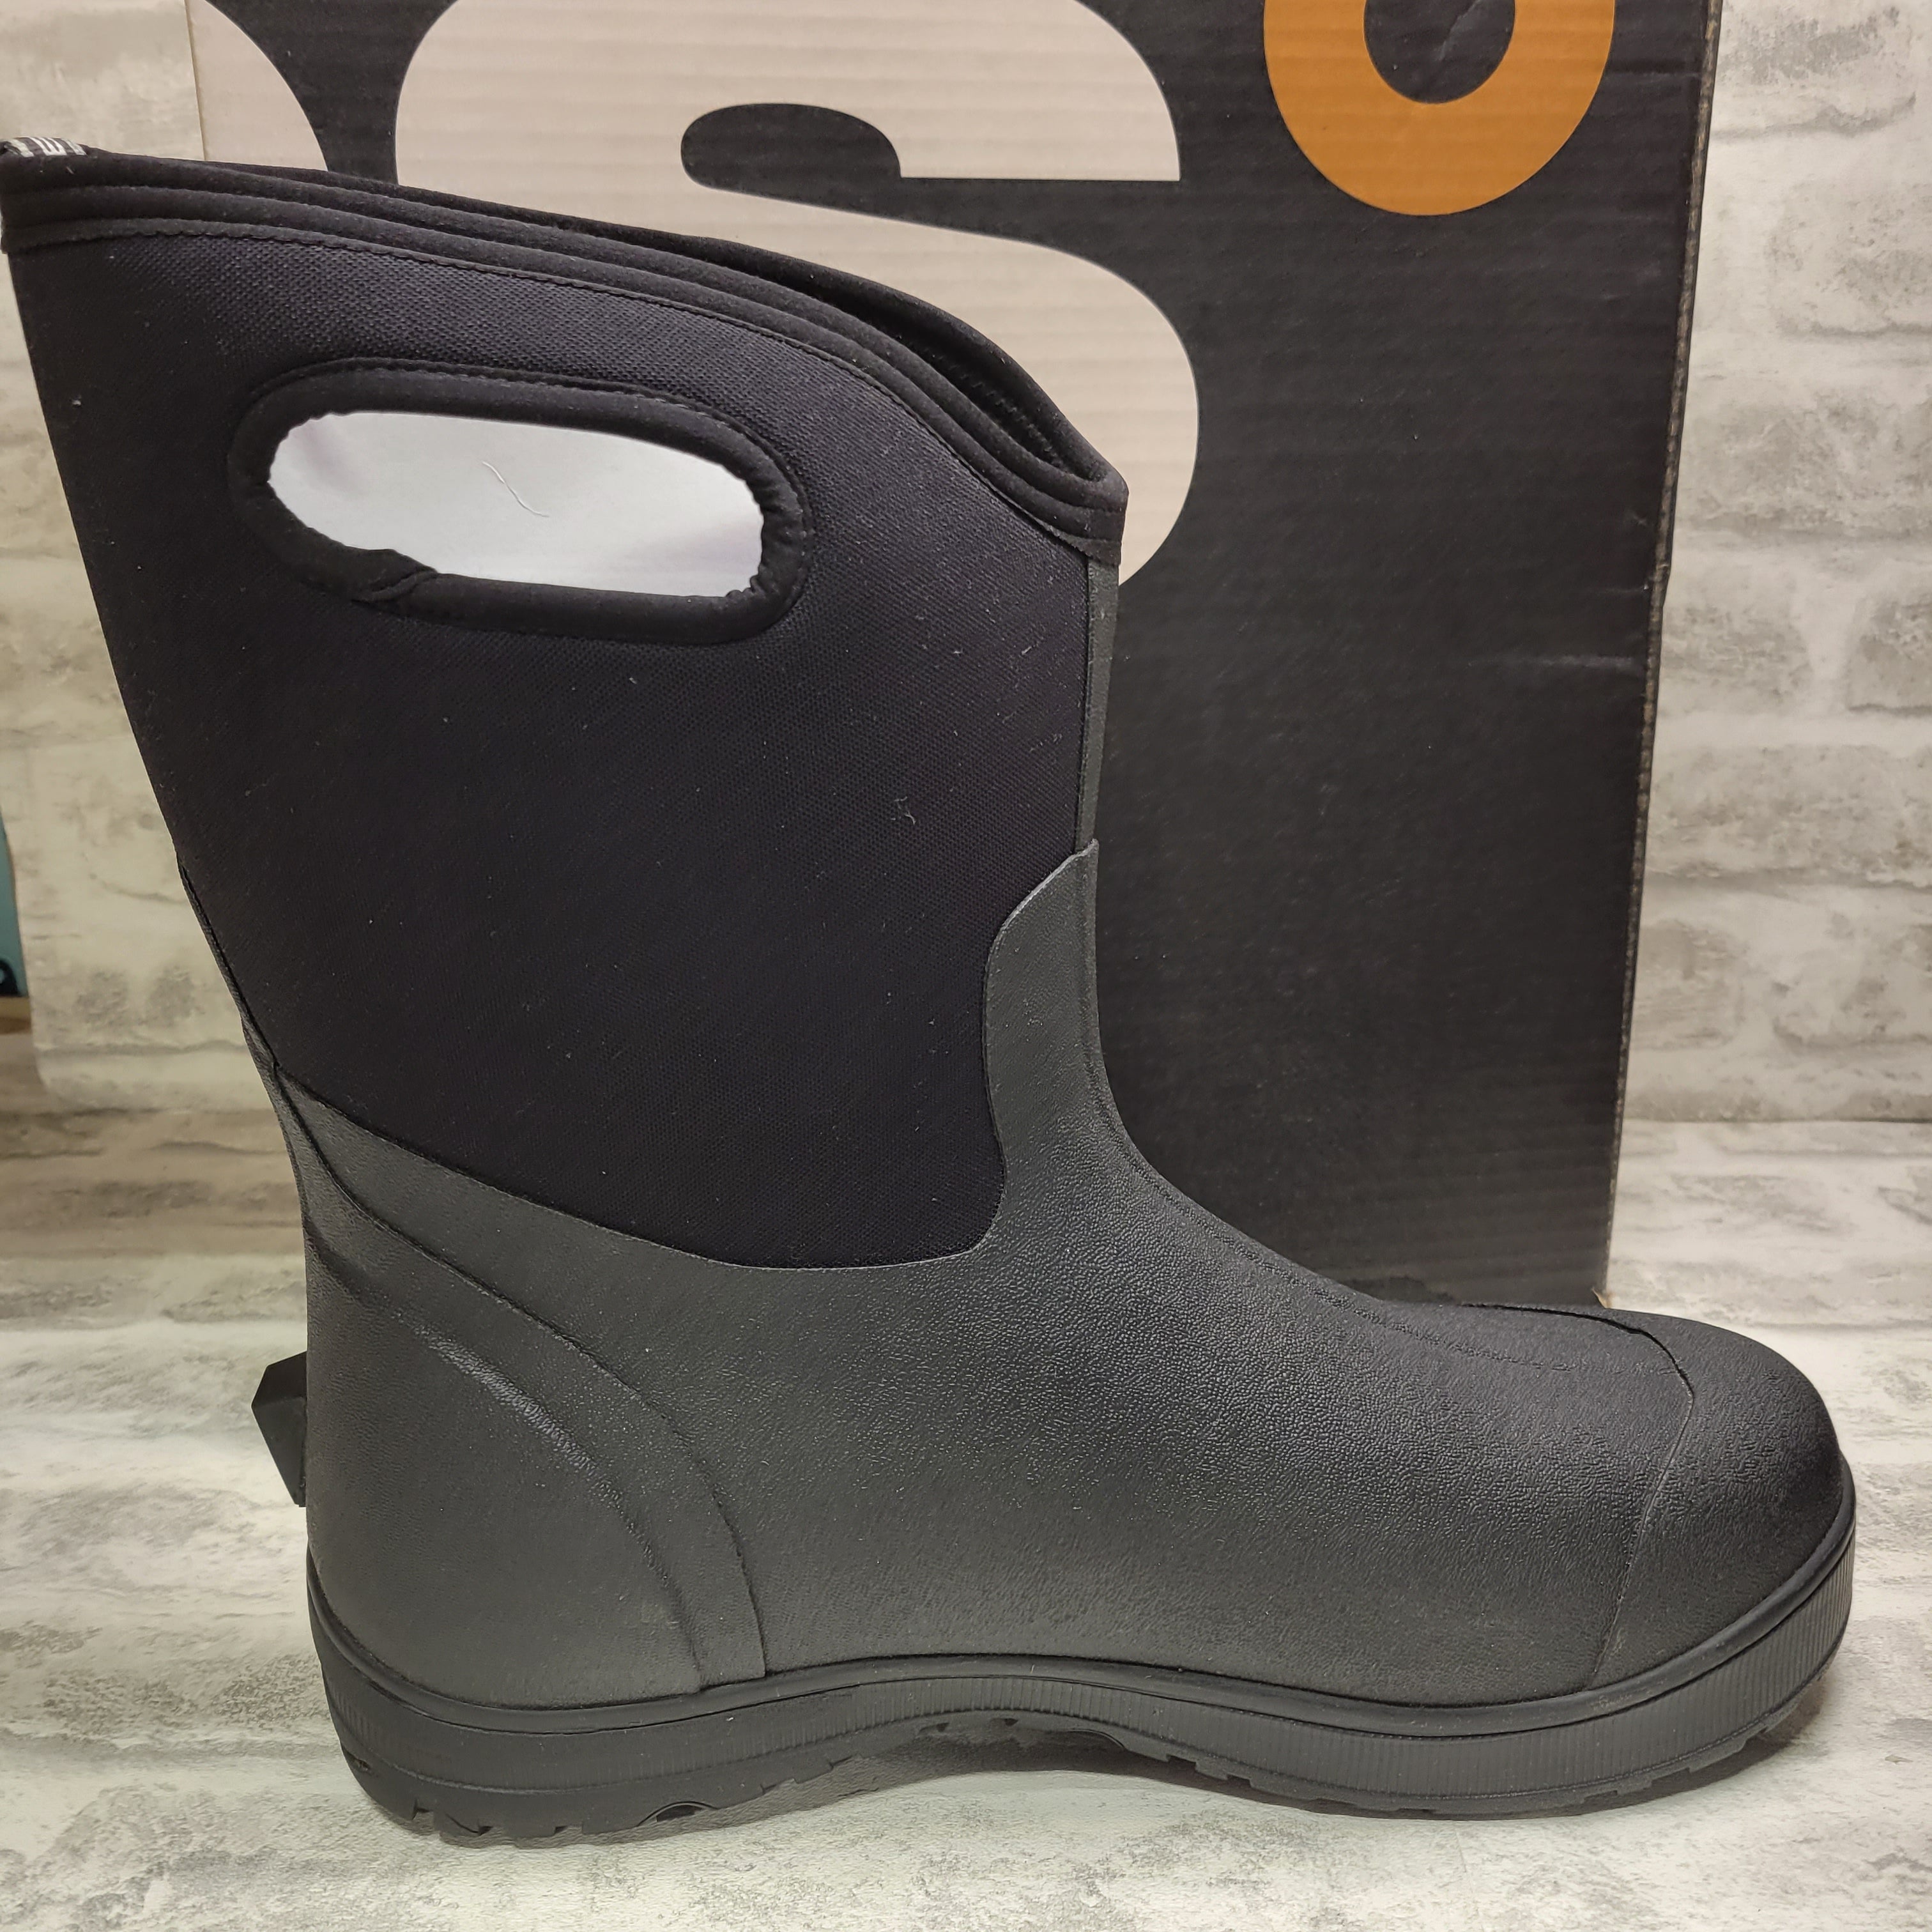 Bogs Men's Ultra Mid Insulated Waterproof Work Rain Boot, Black, 15 D(M) US (7776210747630)